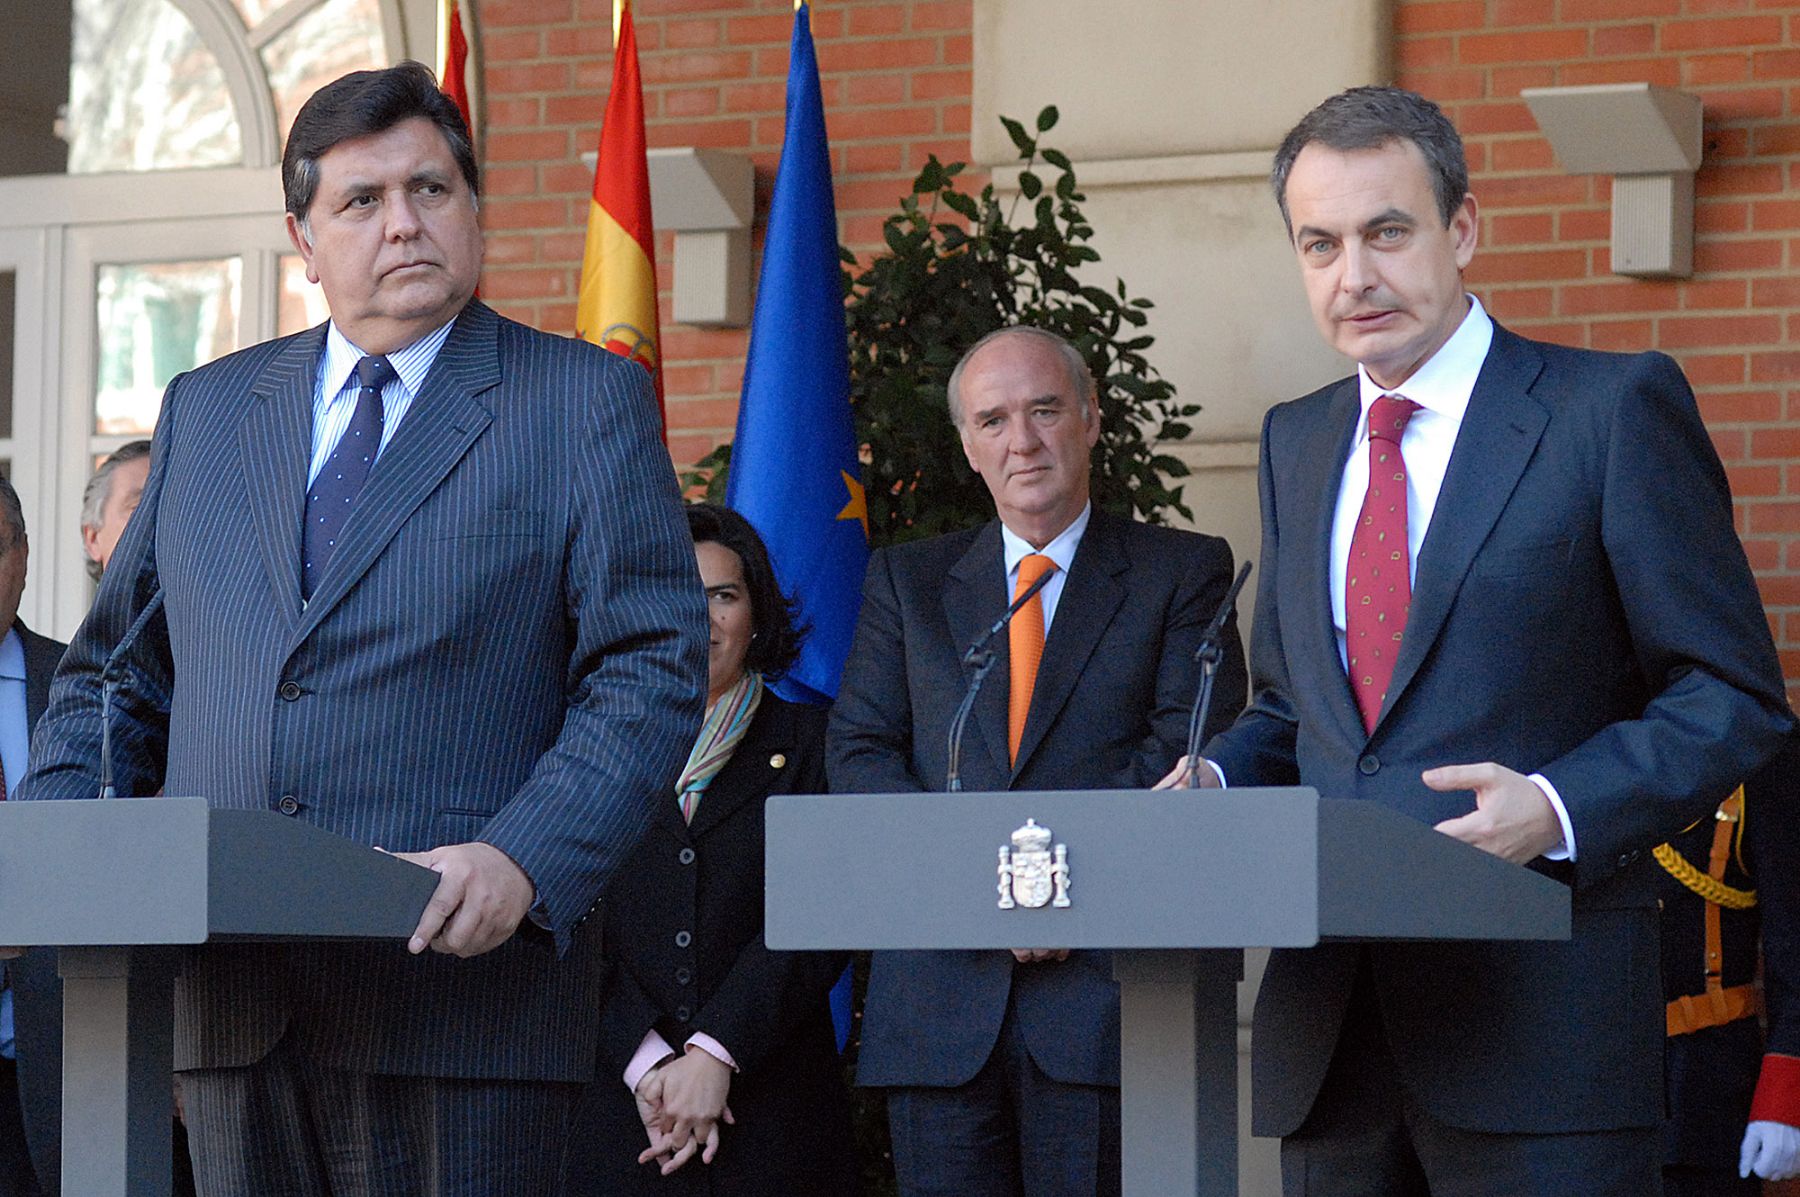 Spain Prime Minister José Luis Rodríguez Zapatero and Peru